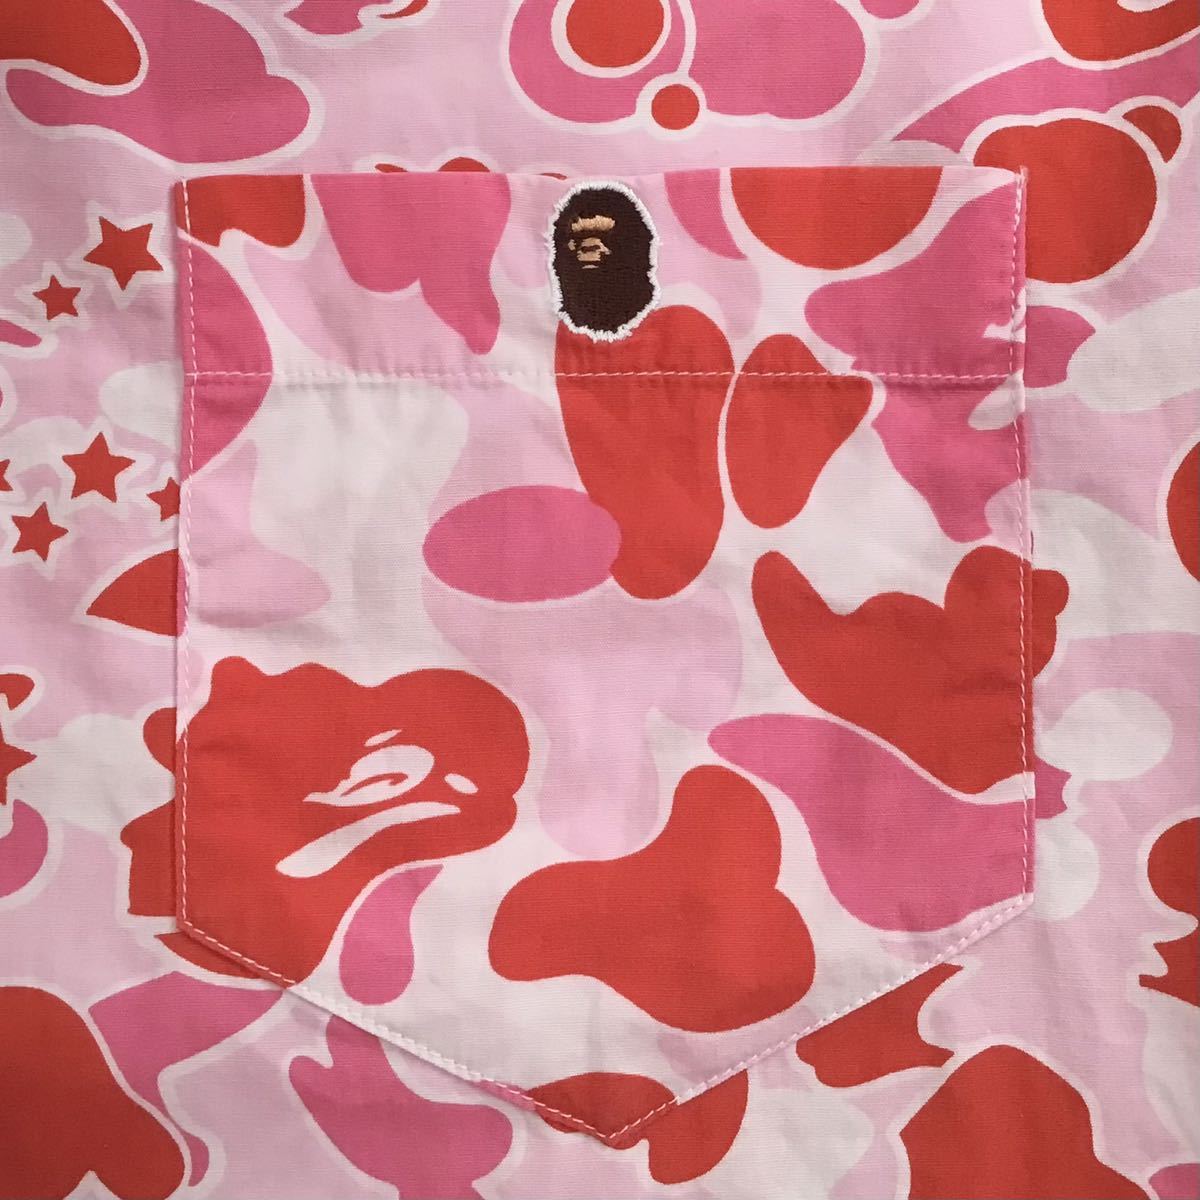 Crazy camo 半袖シャツ Mサイズ a bathing ape BAPE ABC camo pink sta camo psyche エイプ ベイプ アベイシングエイプ ABCカモ NIGO w5775_画像4